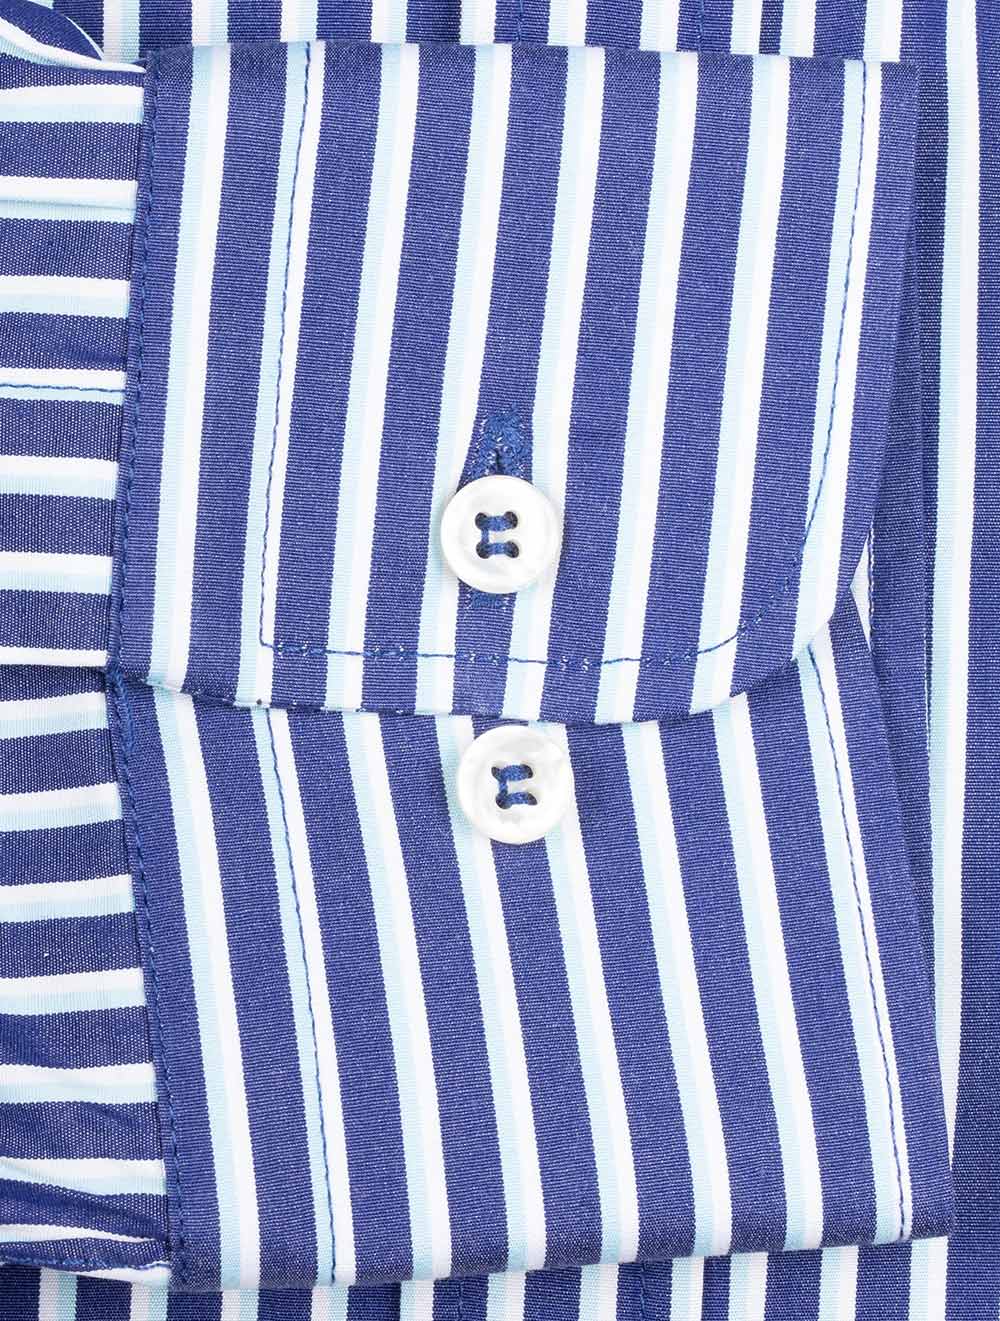 Twin Stripe Buttondown Shirt Navy